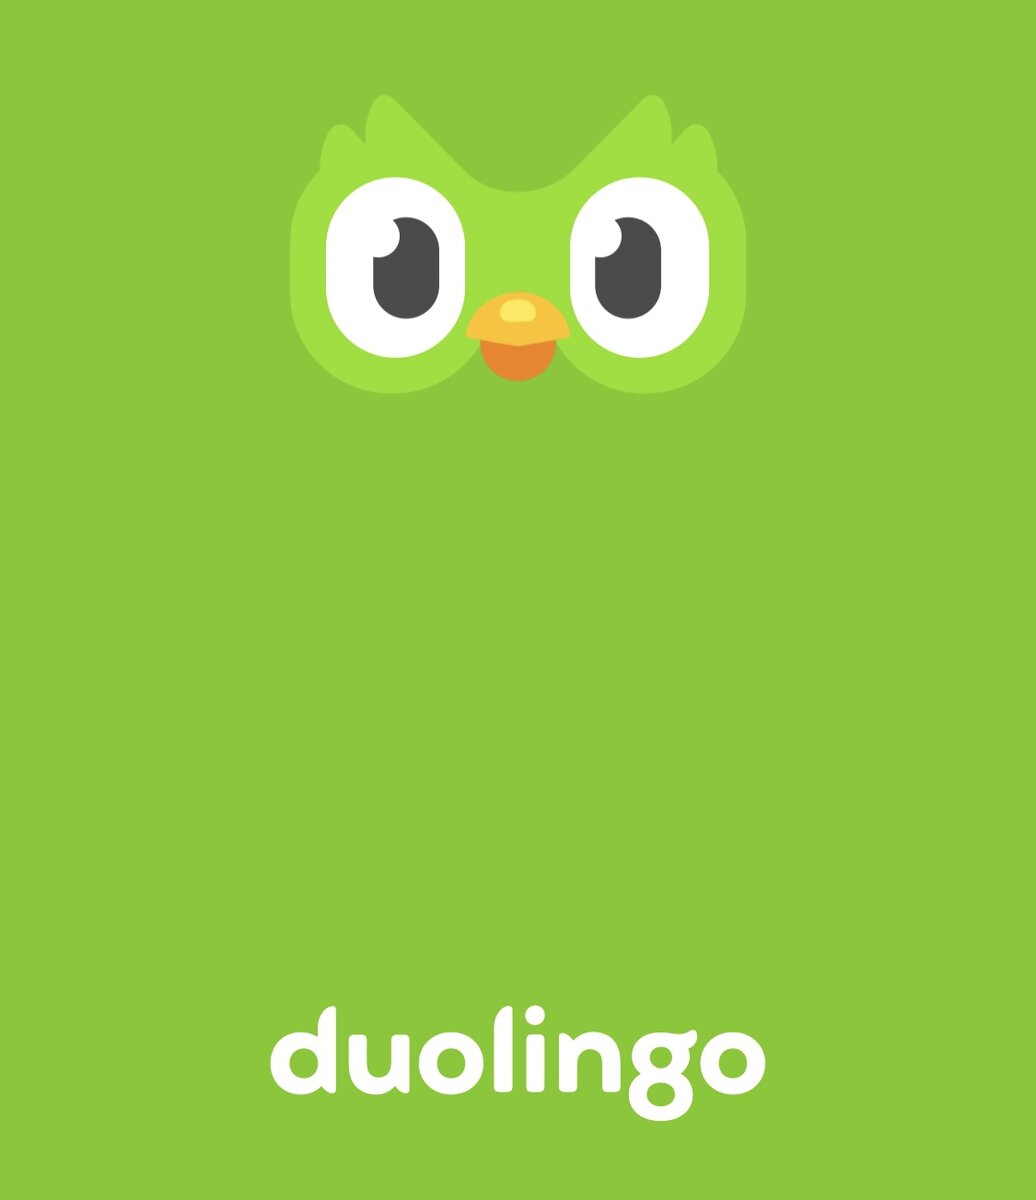 Lily duolingo r34. Сова Дуолинго. Значок Duolingo. Картинка приложения Duolingo. Дуолинго арты.